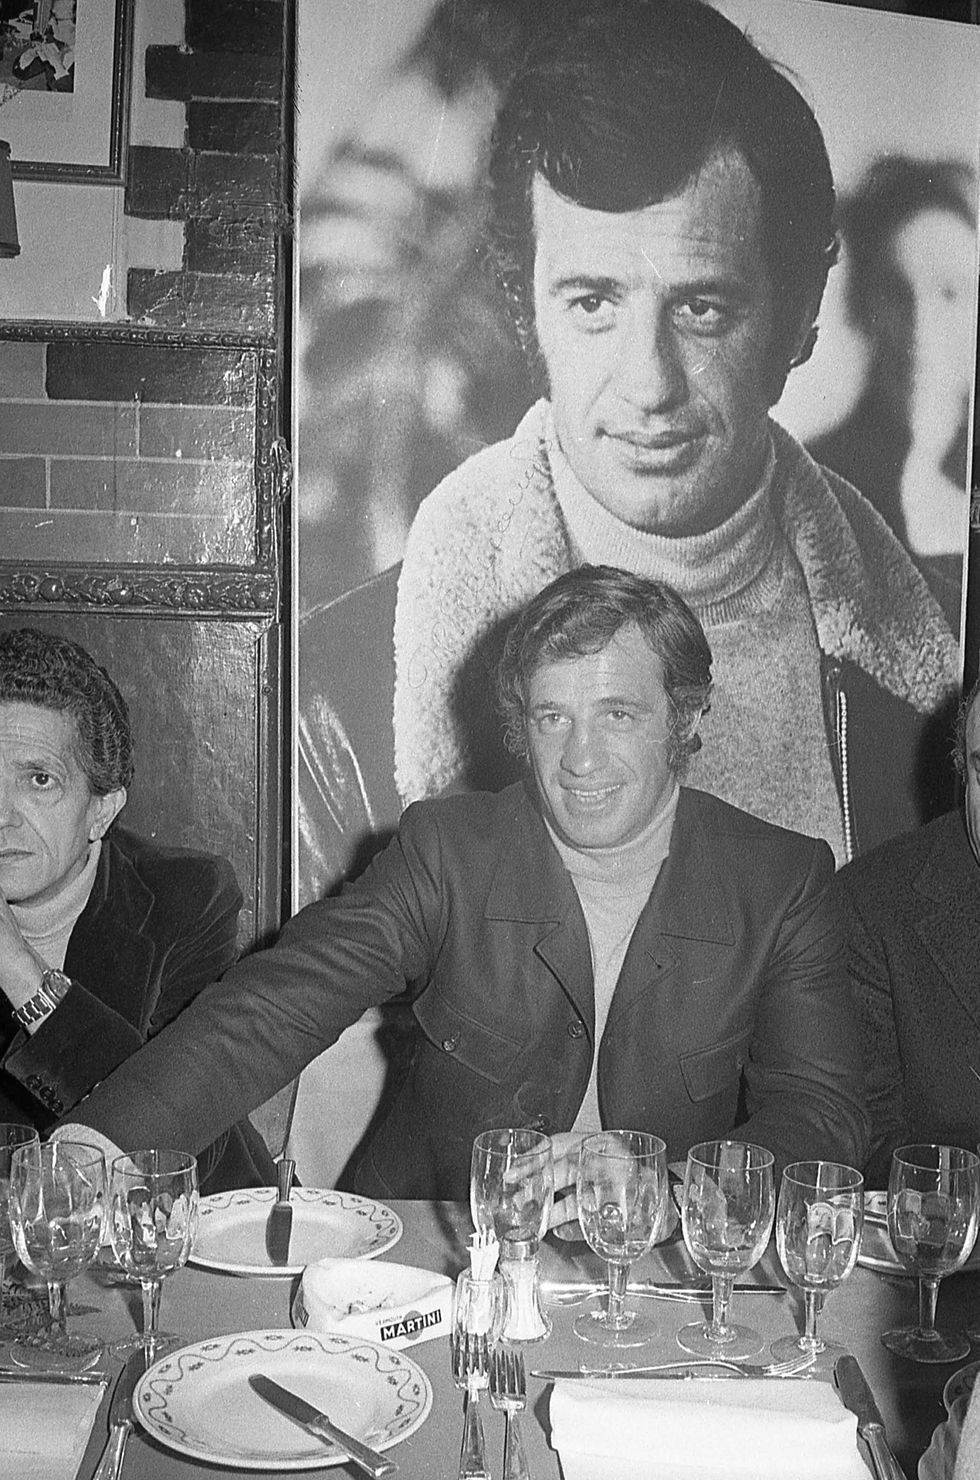 french actor jean paul belmondo has dinner at the 'taverna flavia', rome 1971